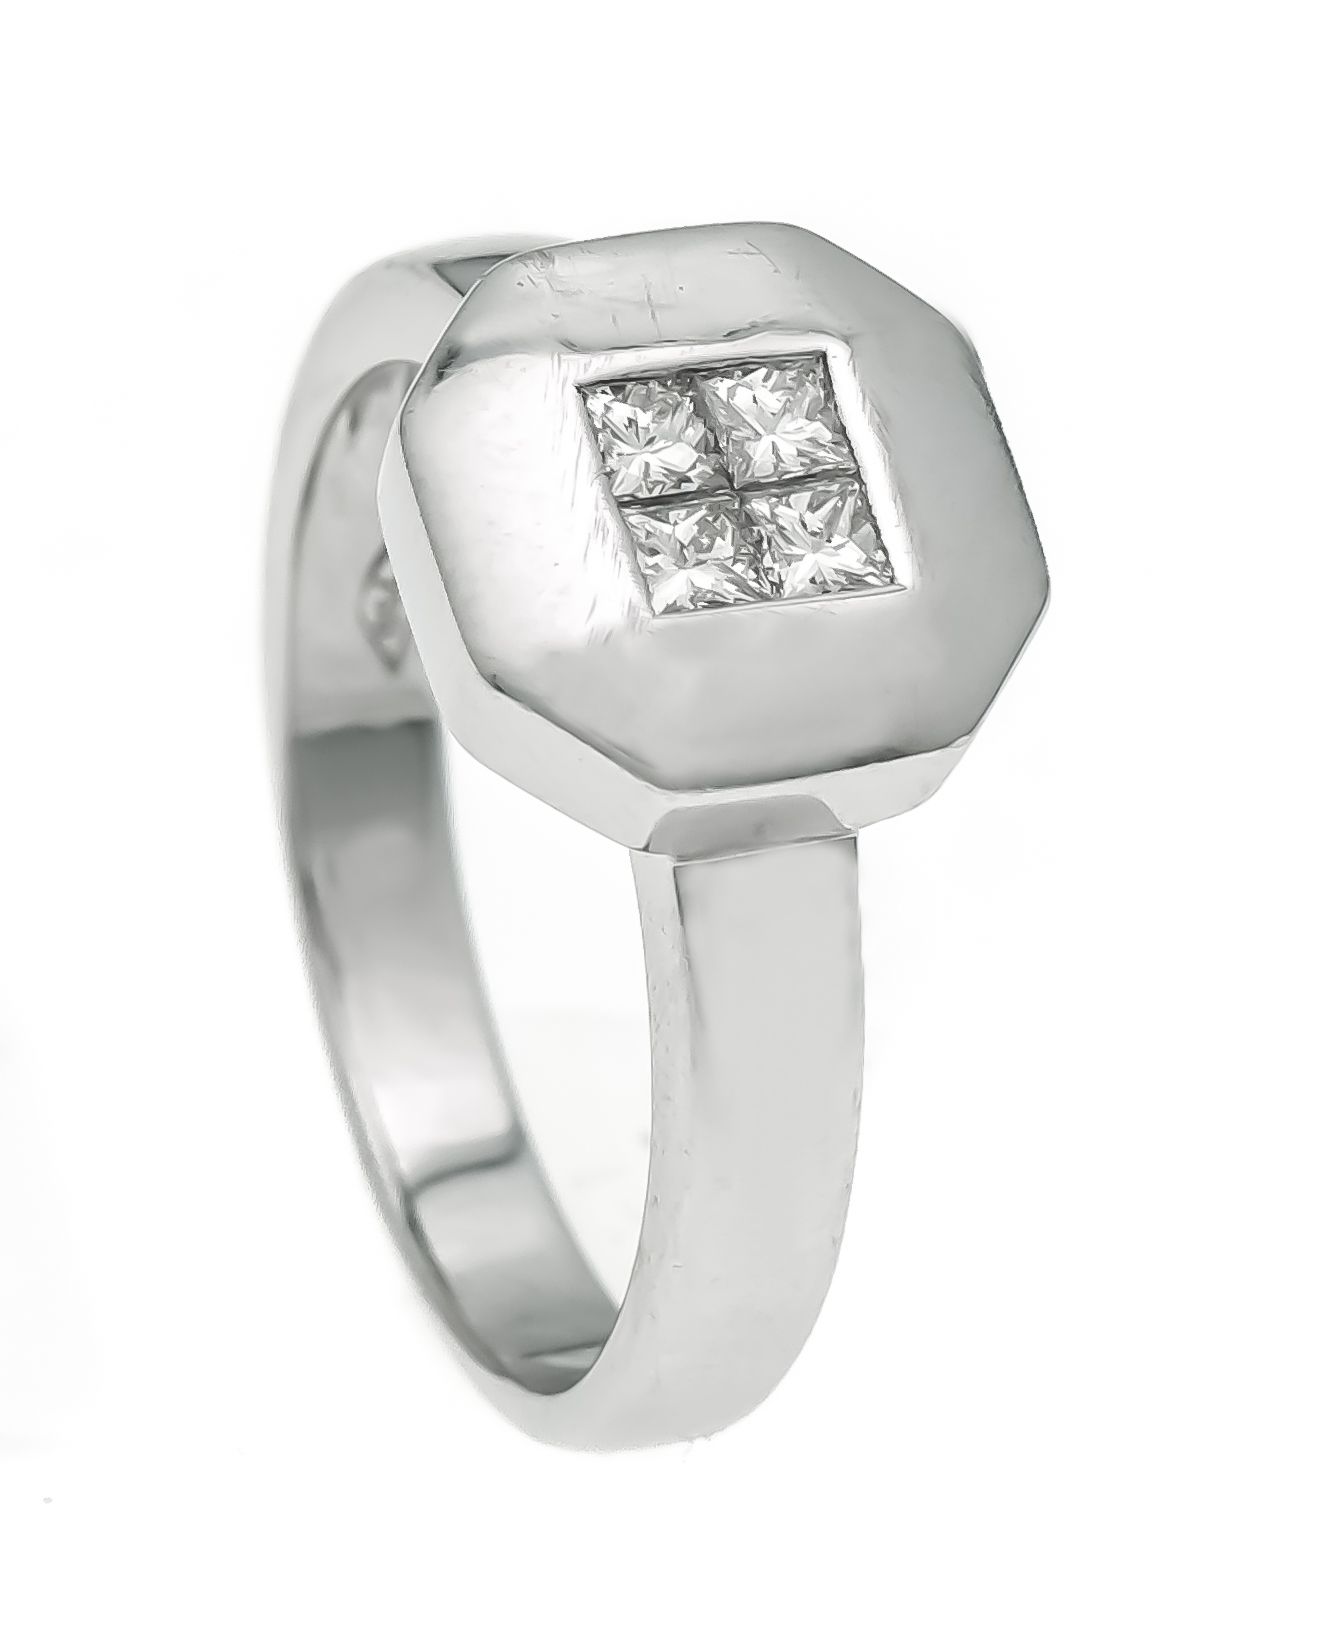 Diamond ring WG 750/000 with 4 princess cut diamonds, total 0.12 ct W / VS, RG 54, 5.2 g